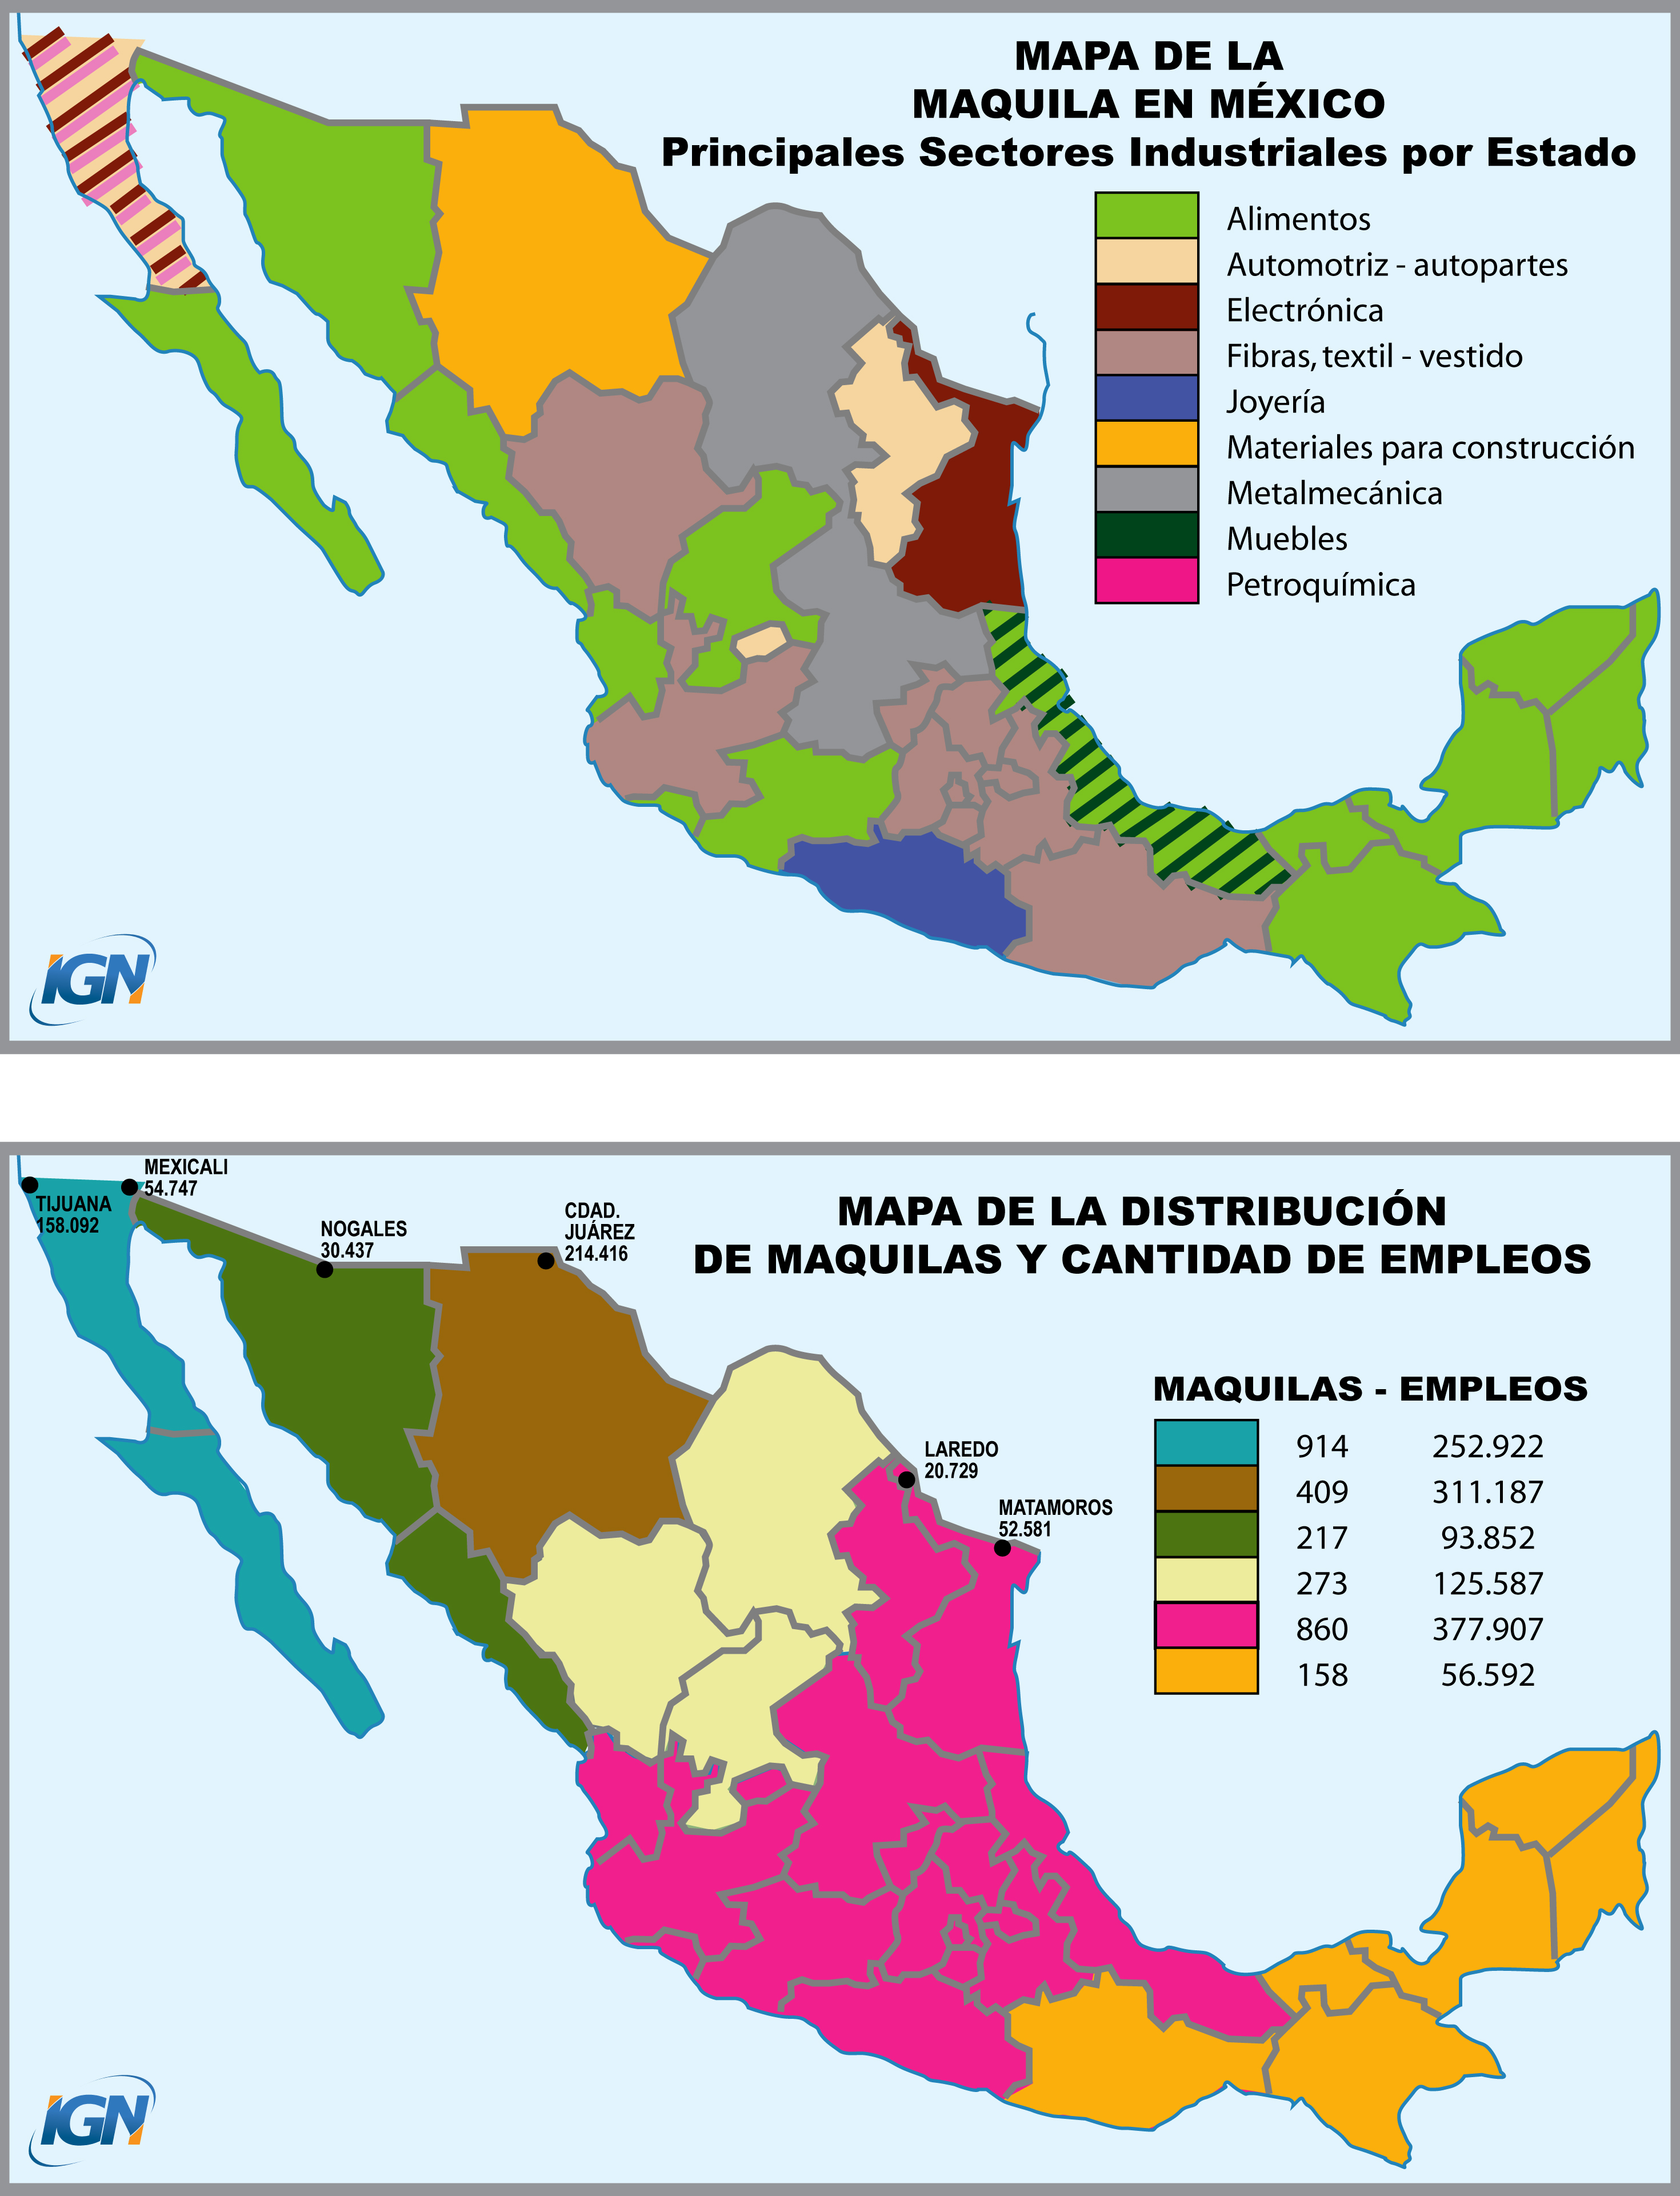 Maquilas de México